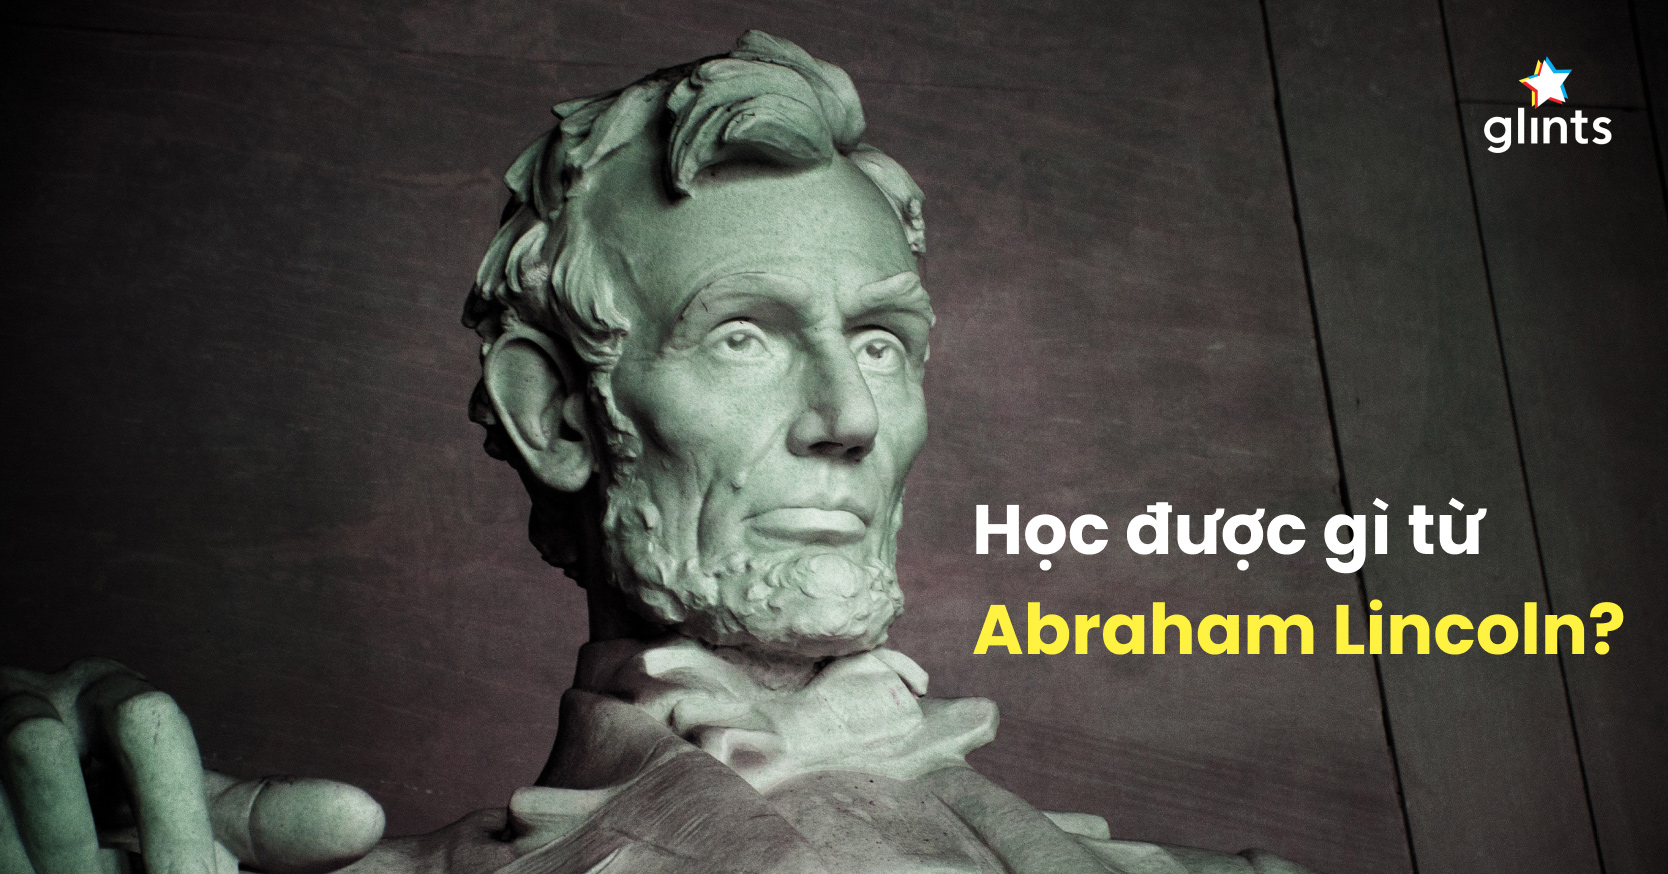 câu chuyện về Abraham Lincoln